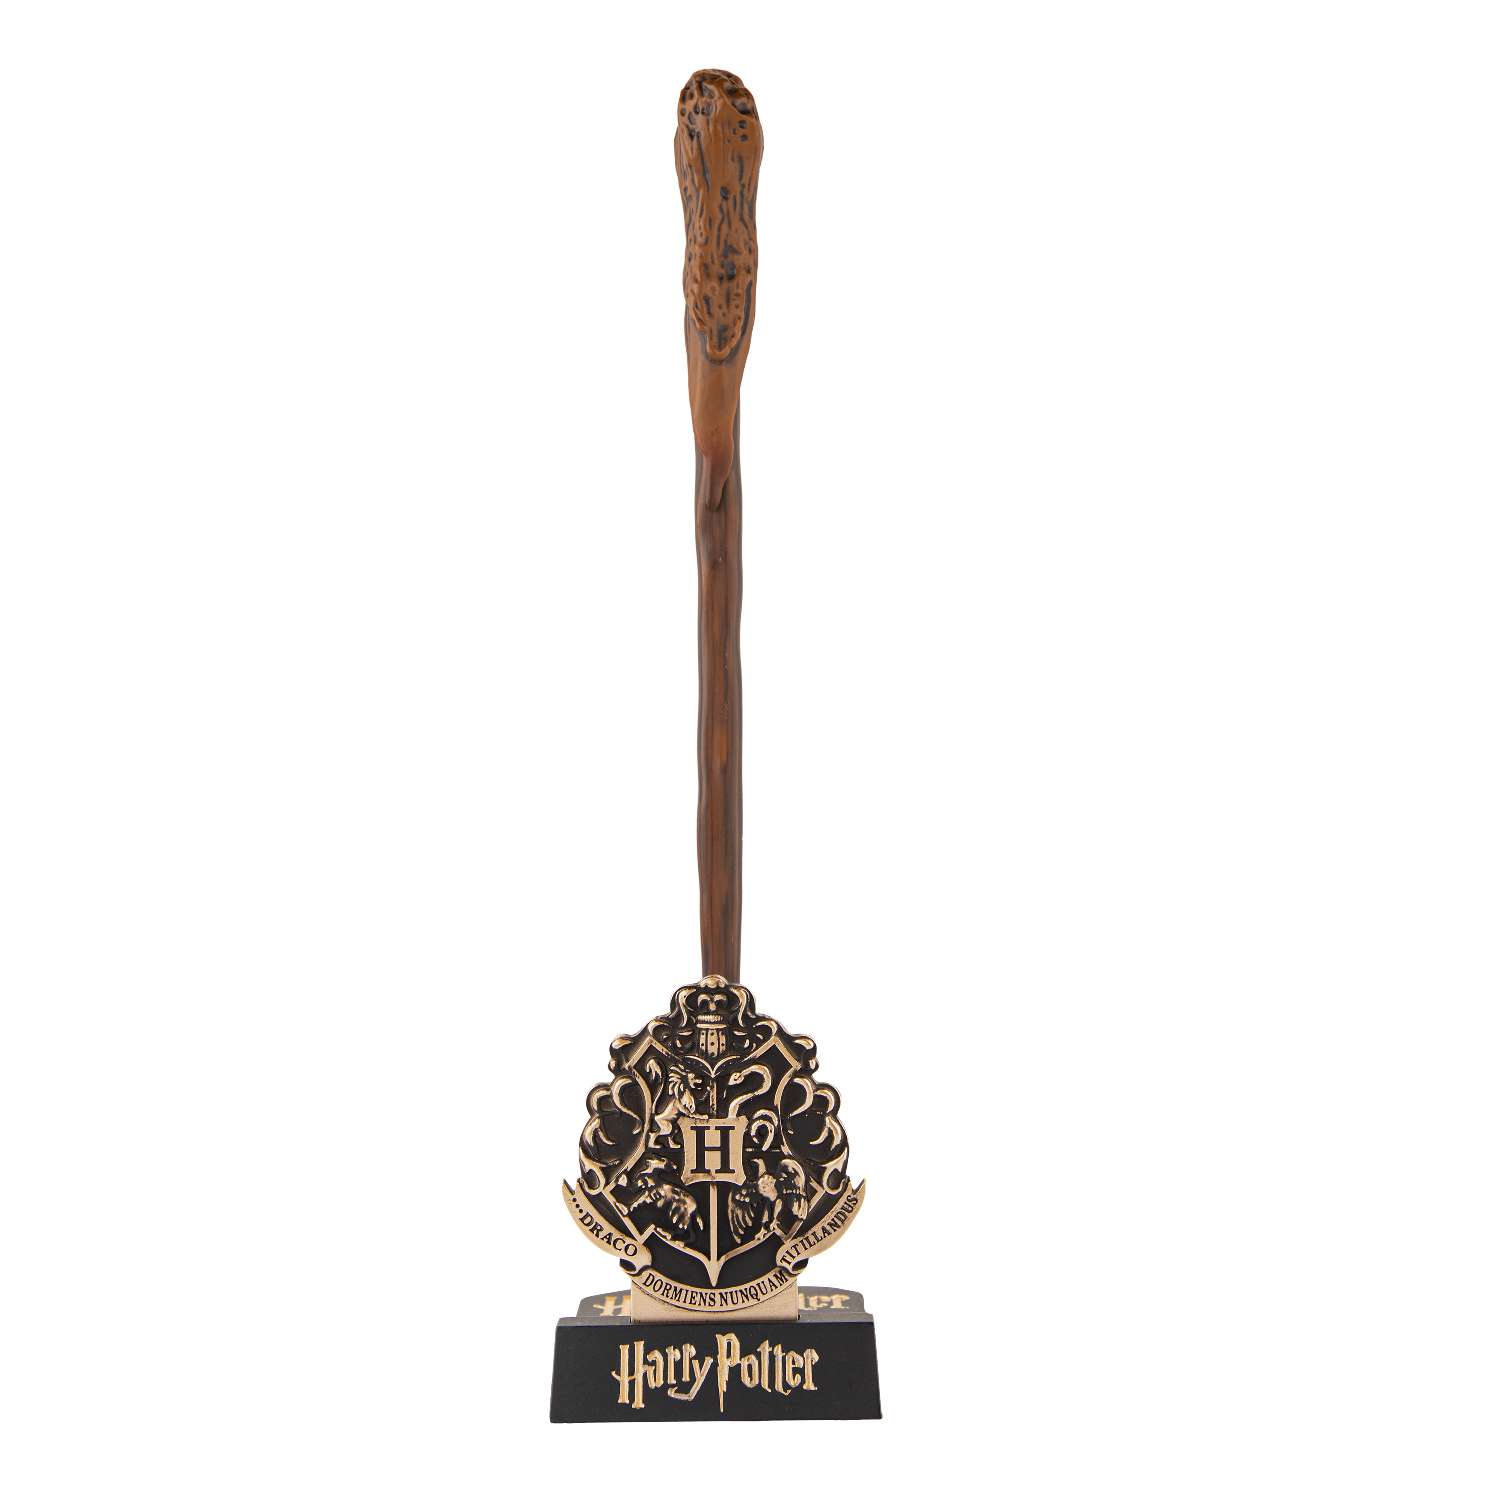 Ручка Harry Potter в виде палочки Рона Уизли 25 см с подставкой и закладкой - фото 6